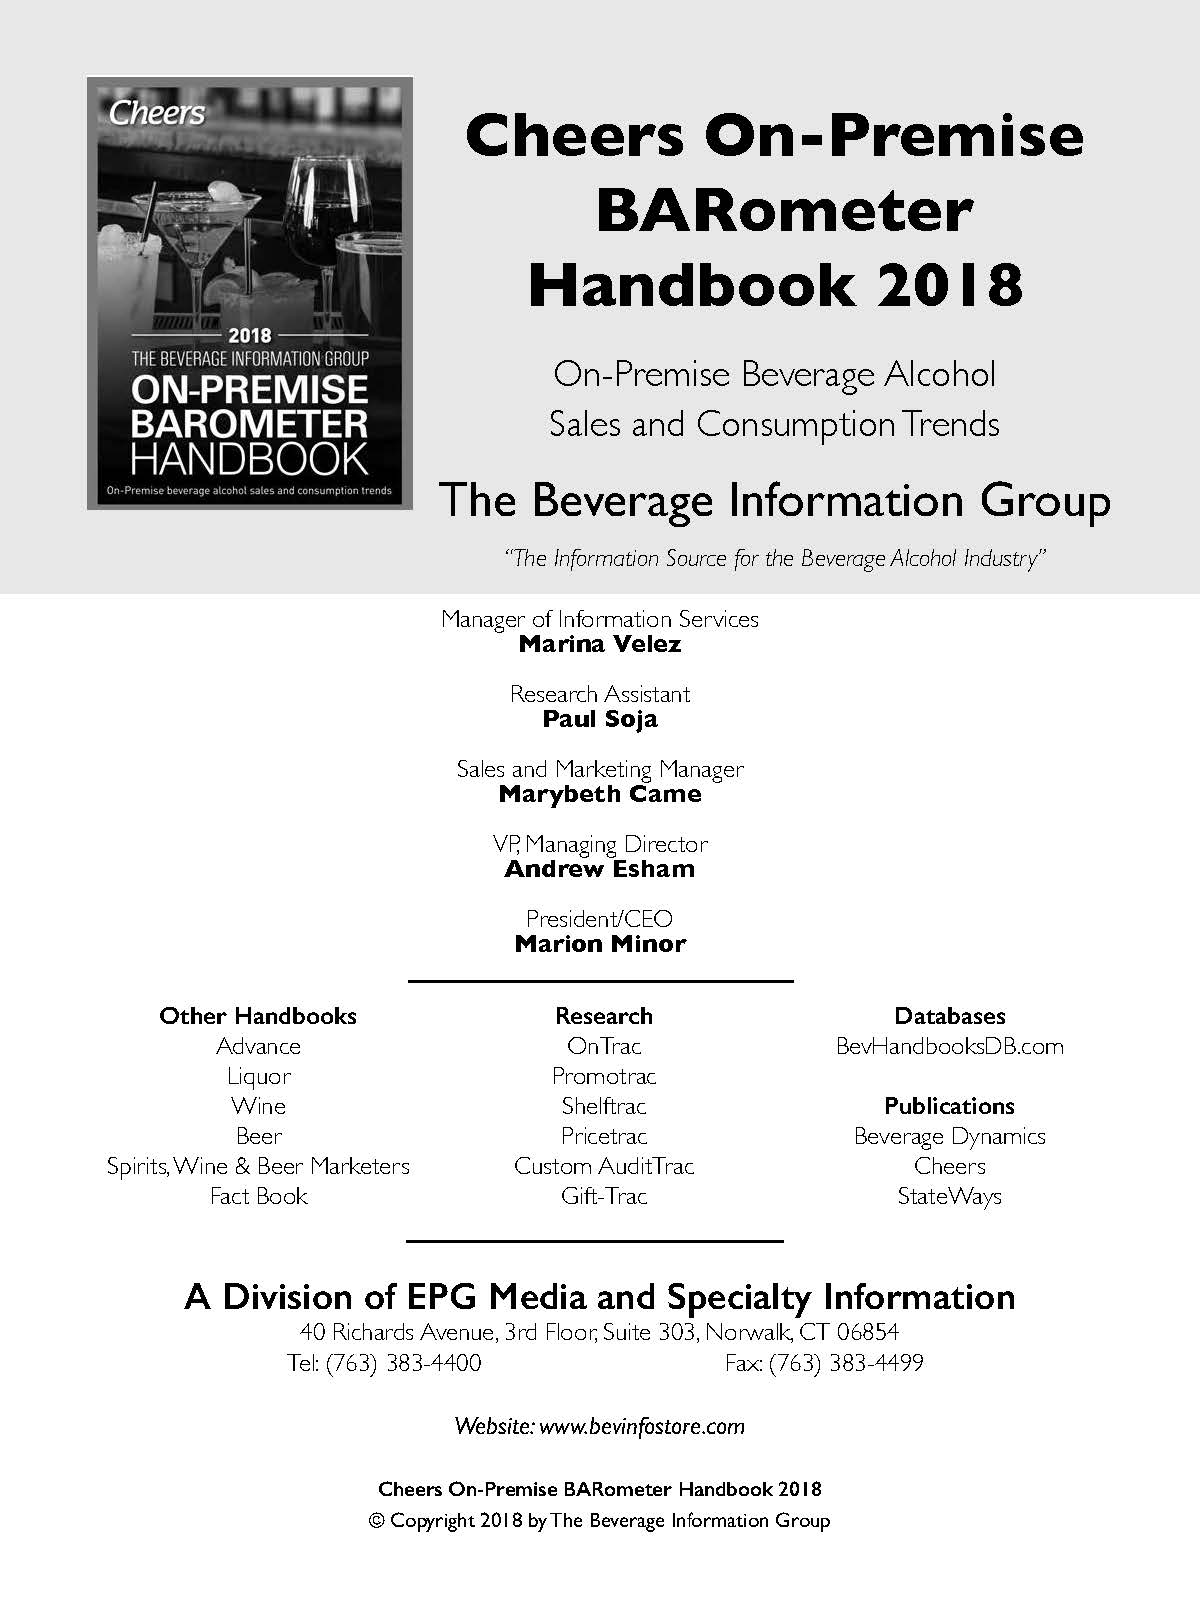 2018 Cheers On-Premise BARometer Handbook  - On Sale 60% Off 2018 Published Price